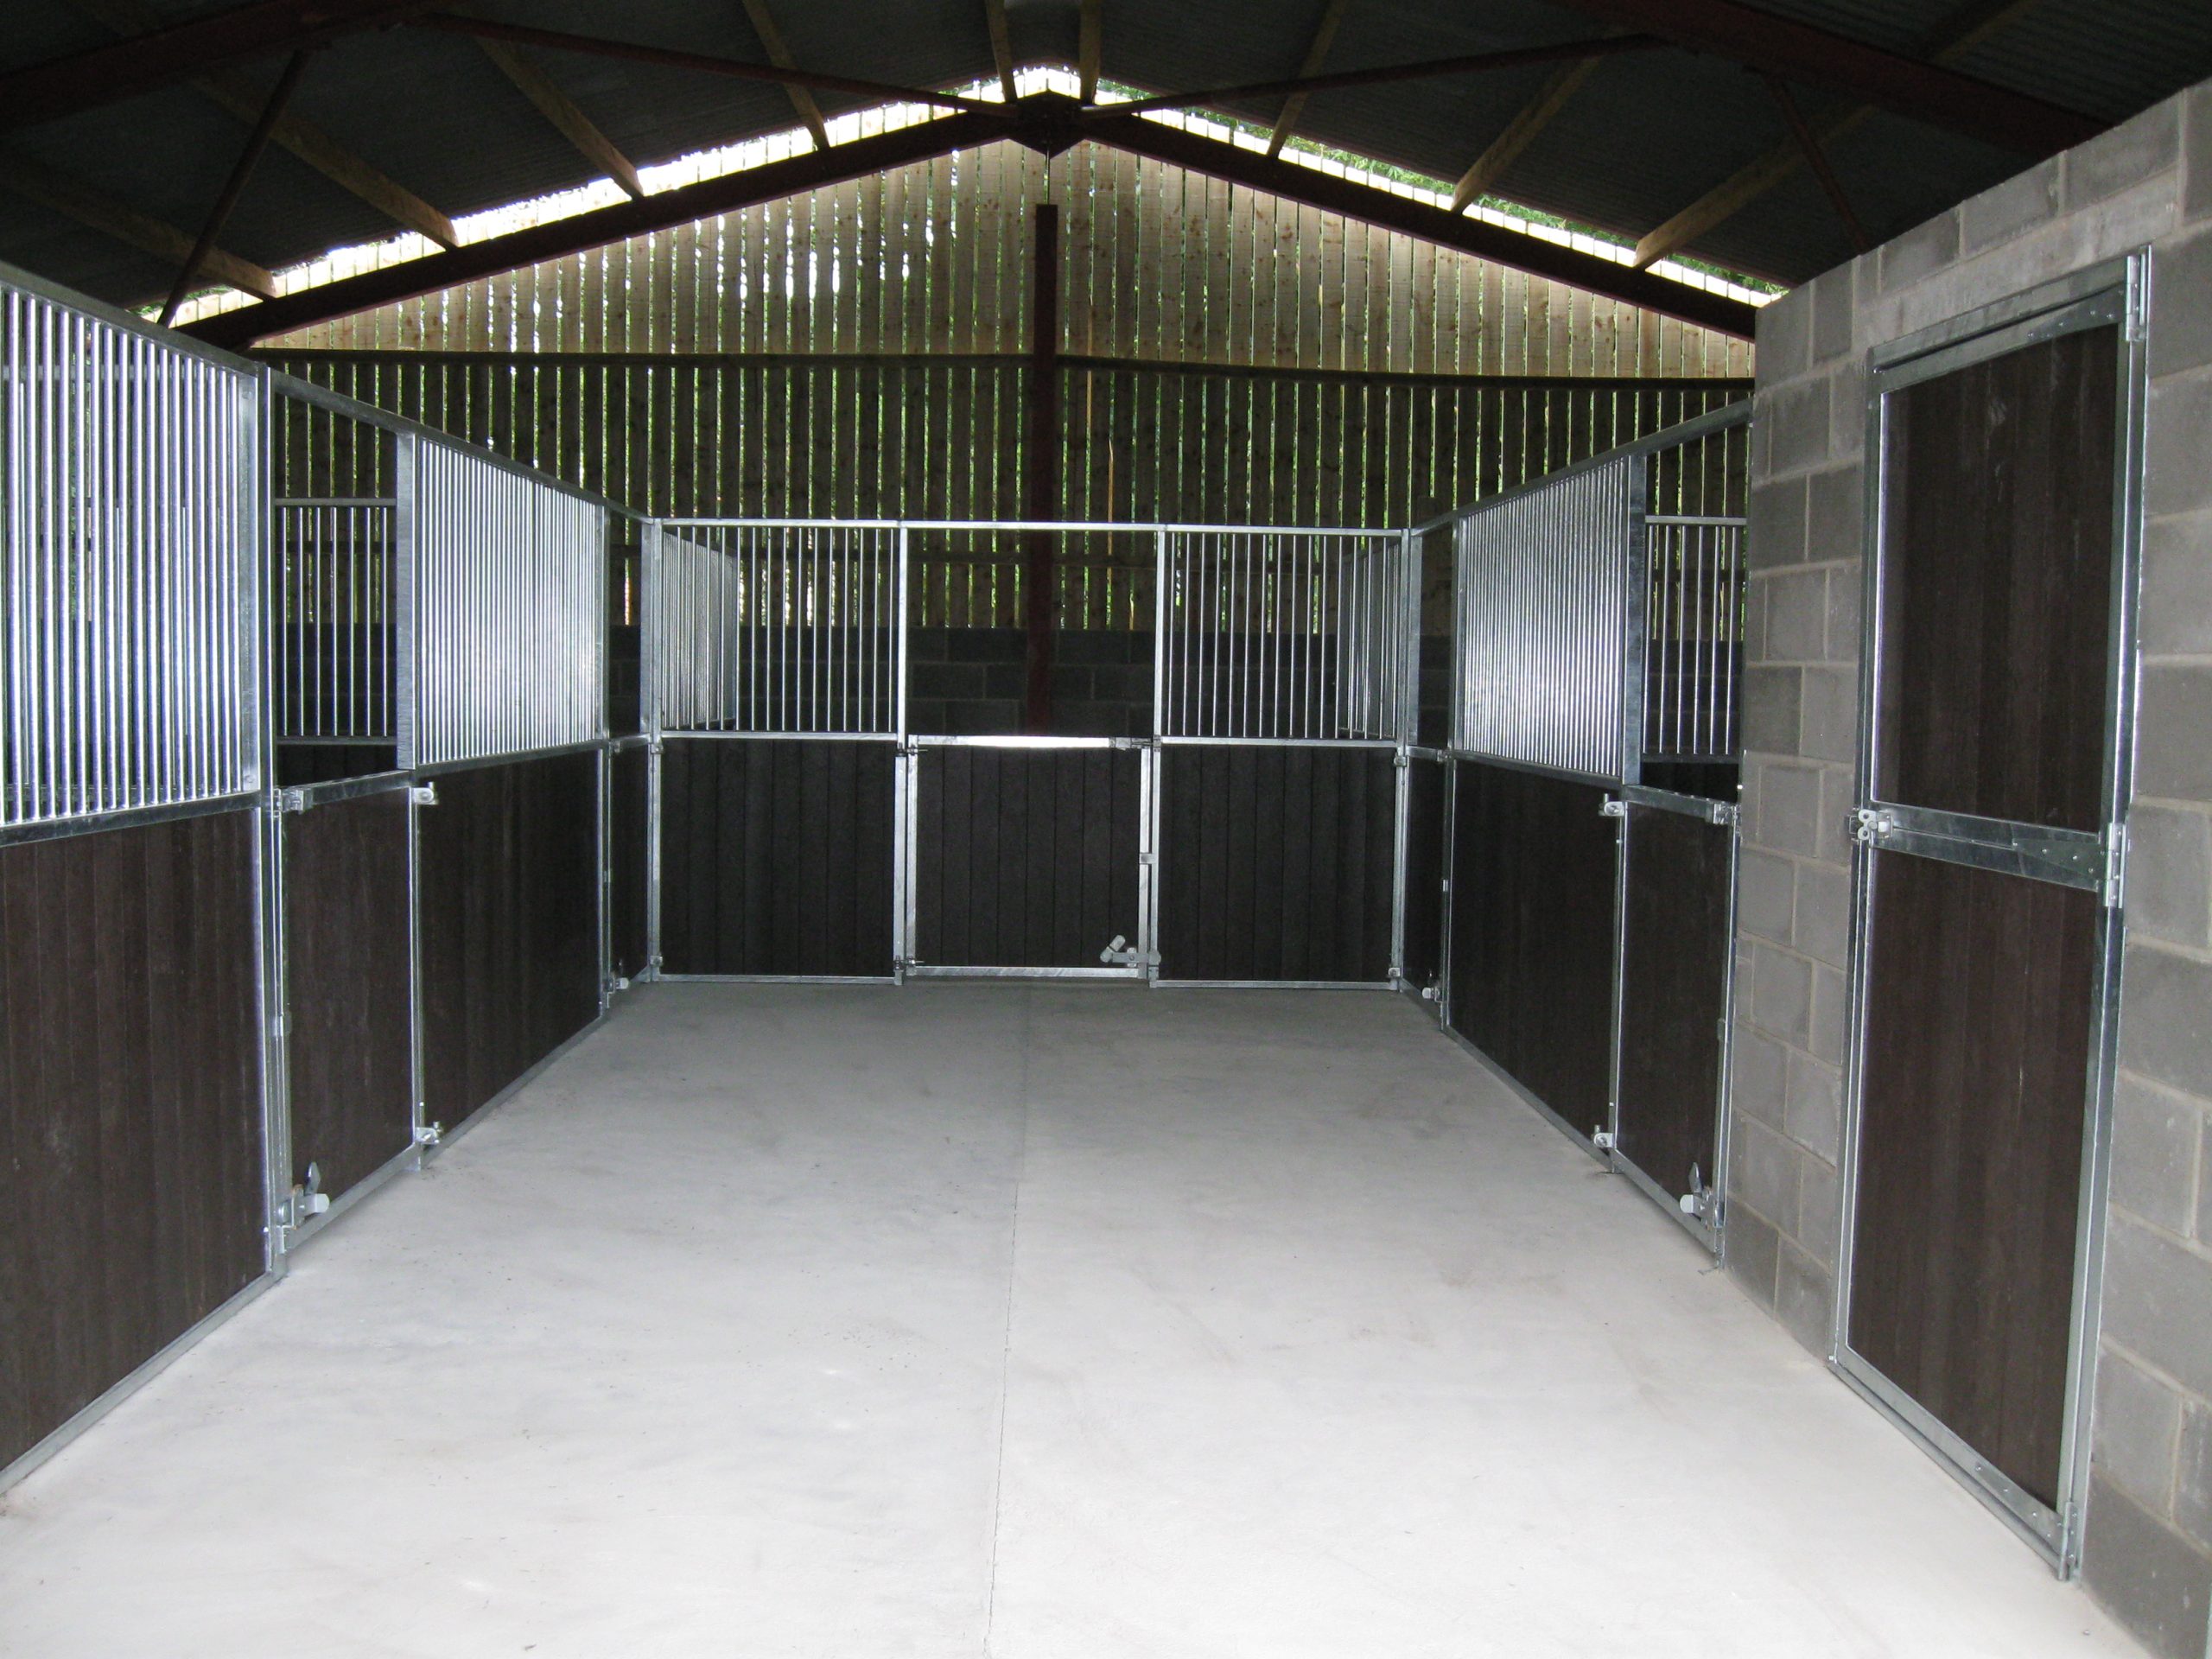 Internal stable stalls